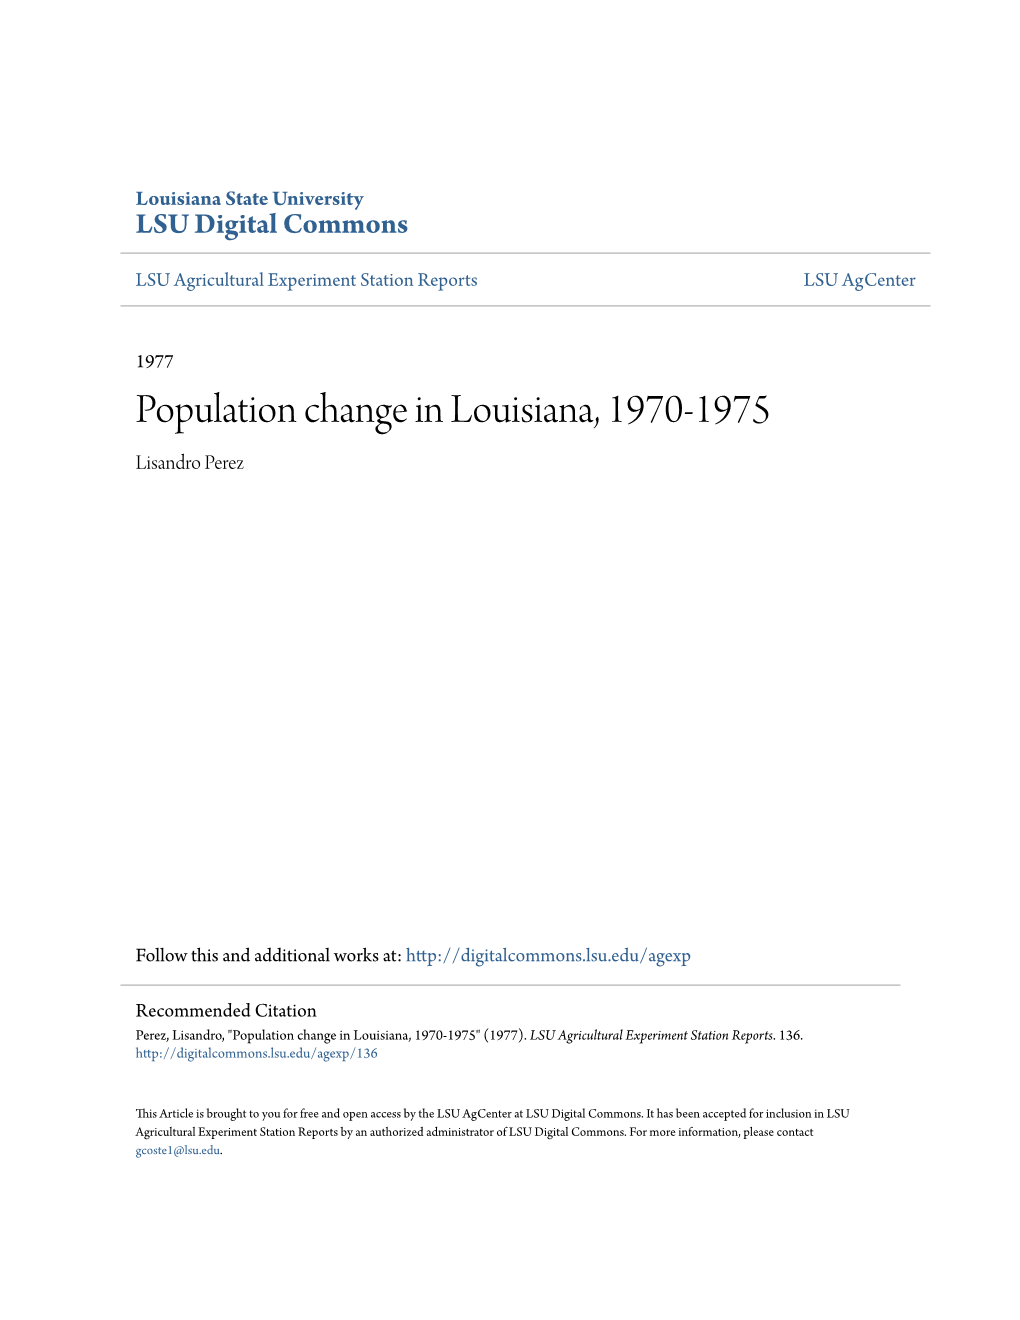 Population Change in Louisiana, 1970-1975 Lisandro Perez